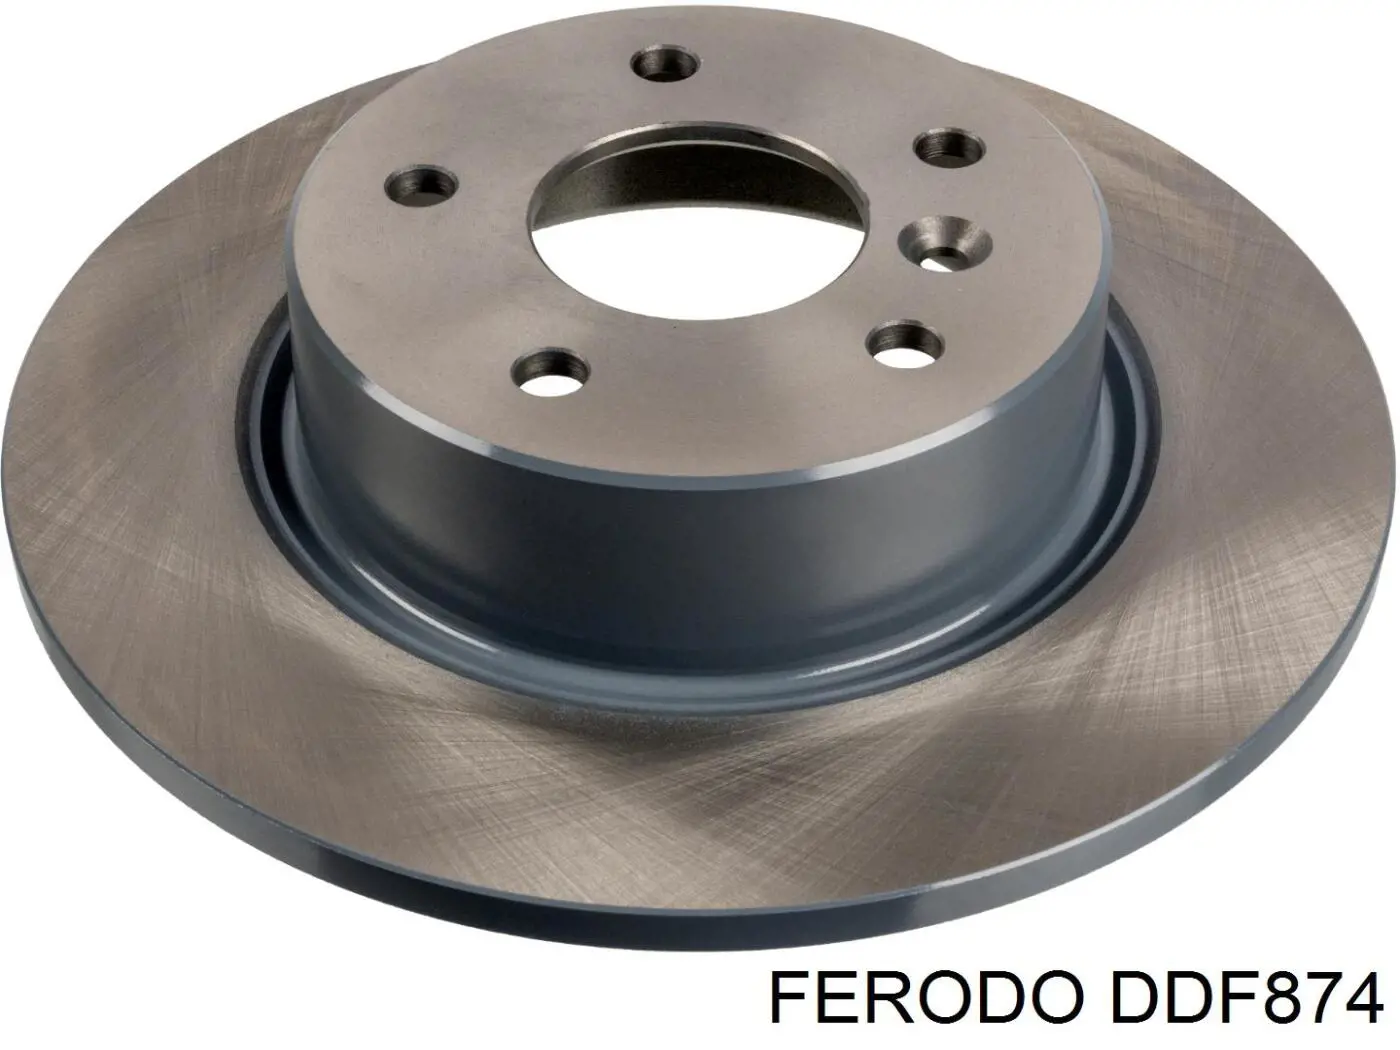 DDF874 Ferodo disco de freno trasero